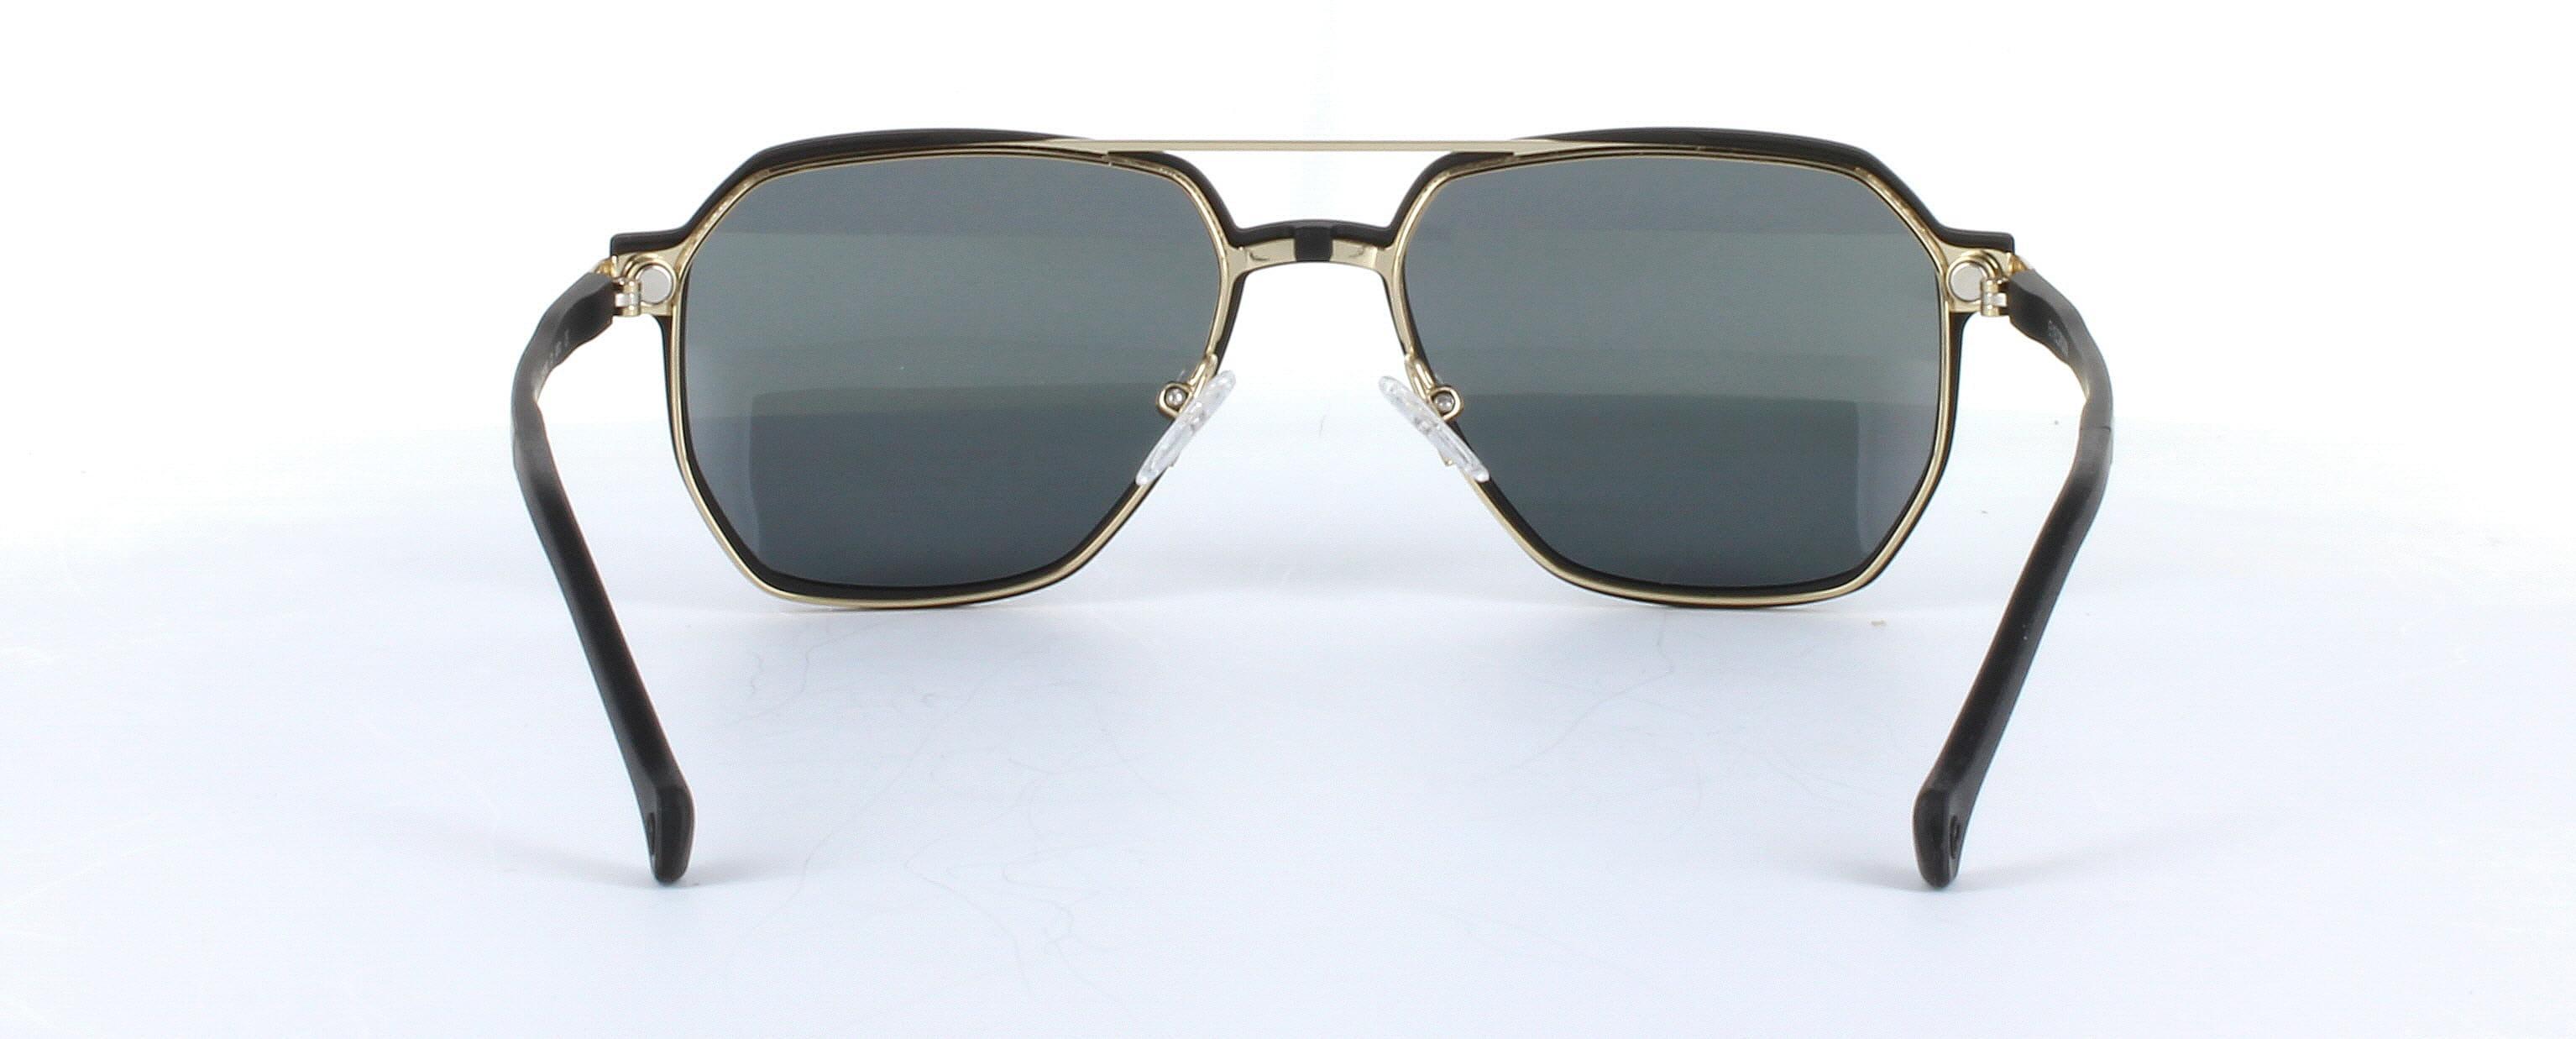 Eyecroxx 617 Black Full Rim Aviator Metal Glasses - Image View 3